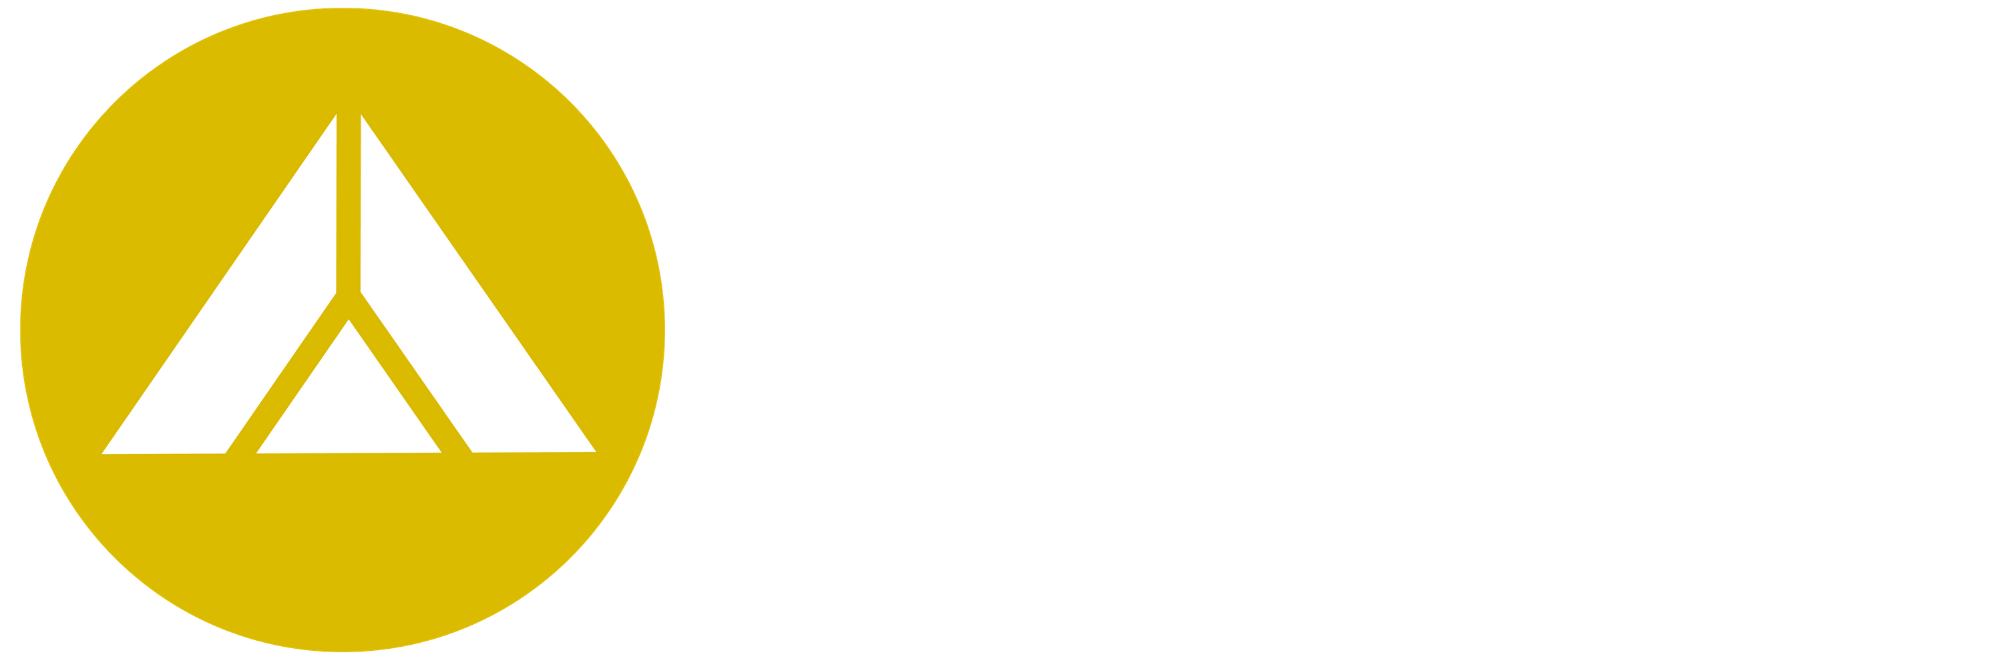 The Point Church